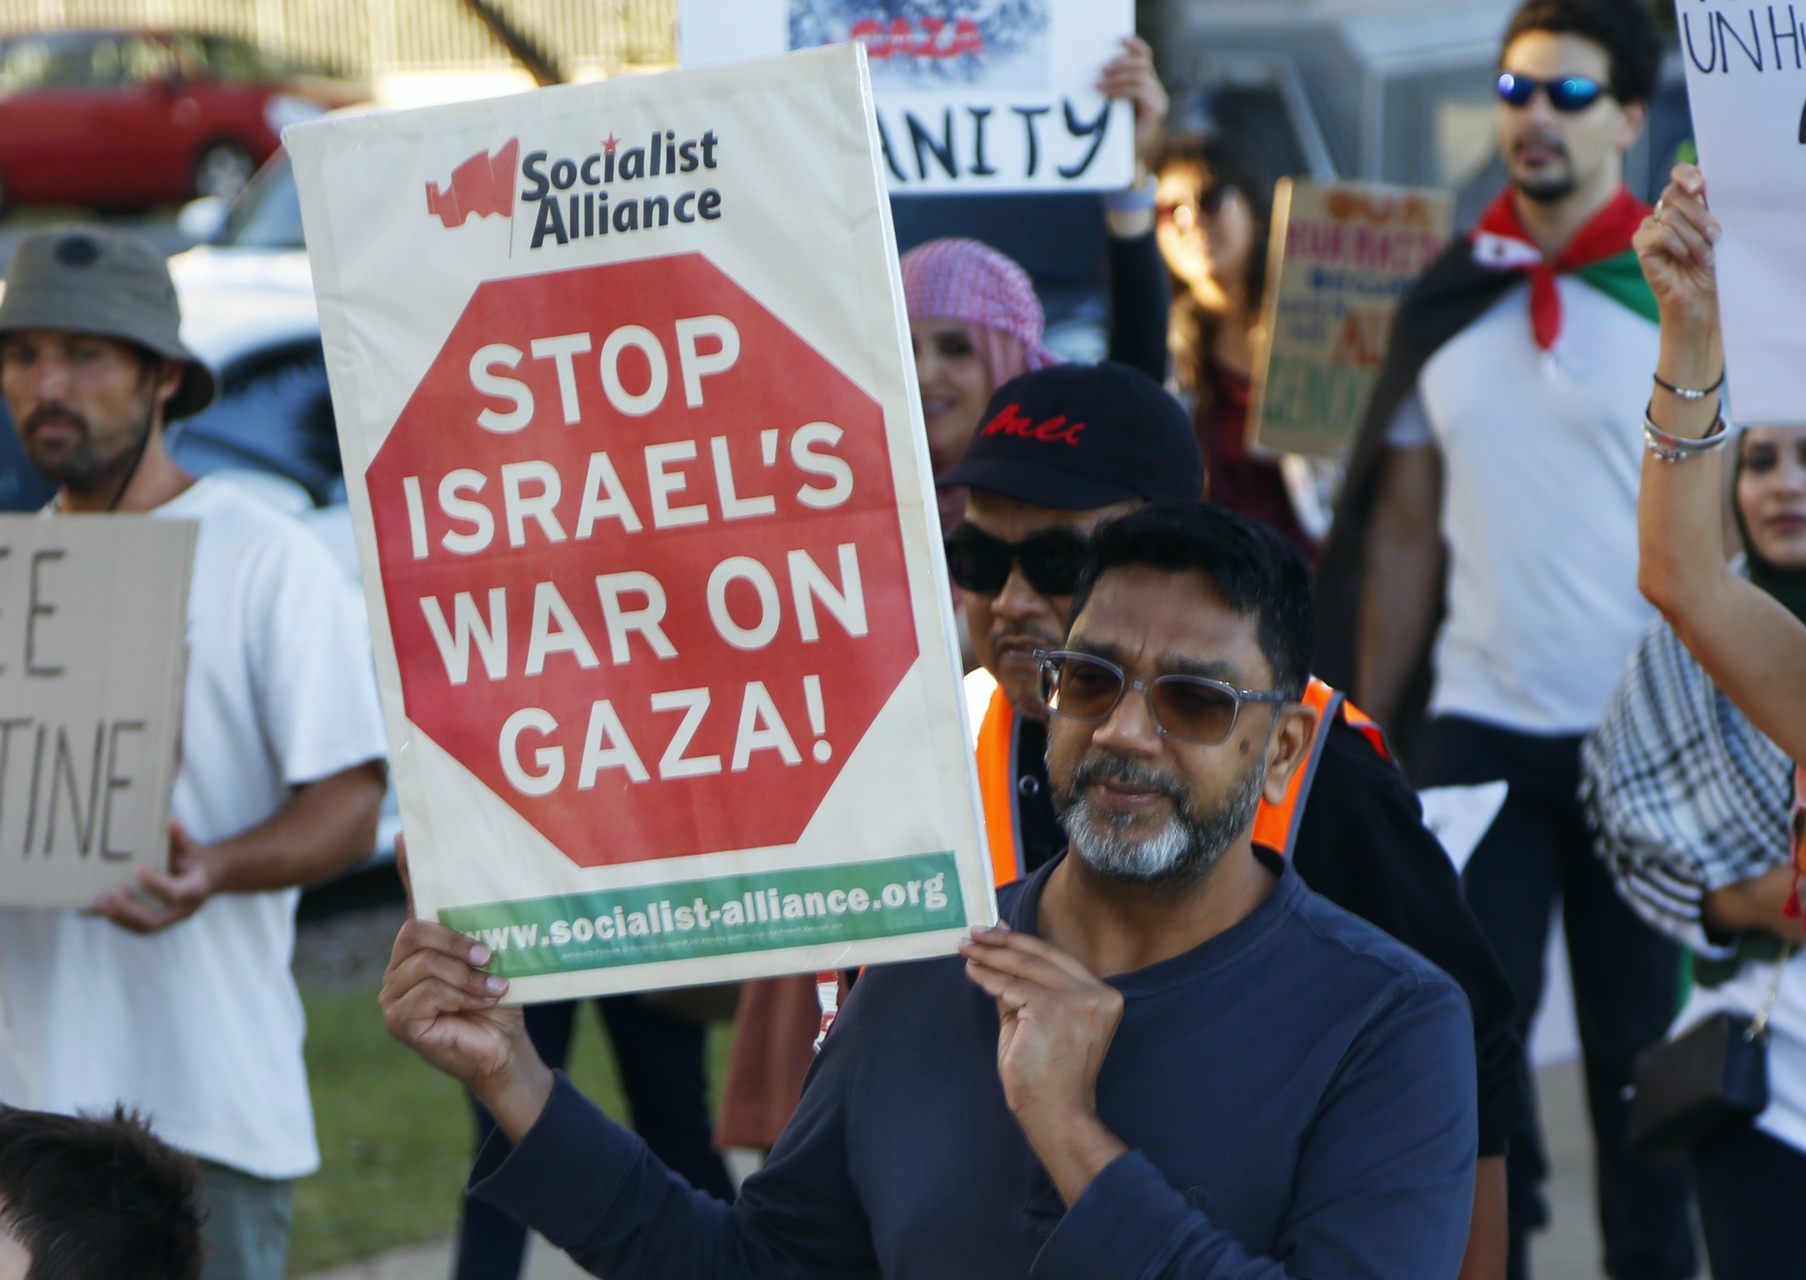 Stop Israel's war on Gaza, Gold Coast, December 9